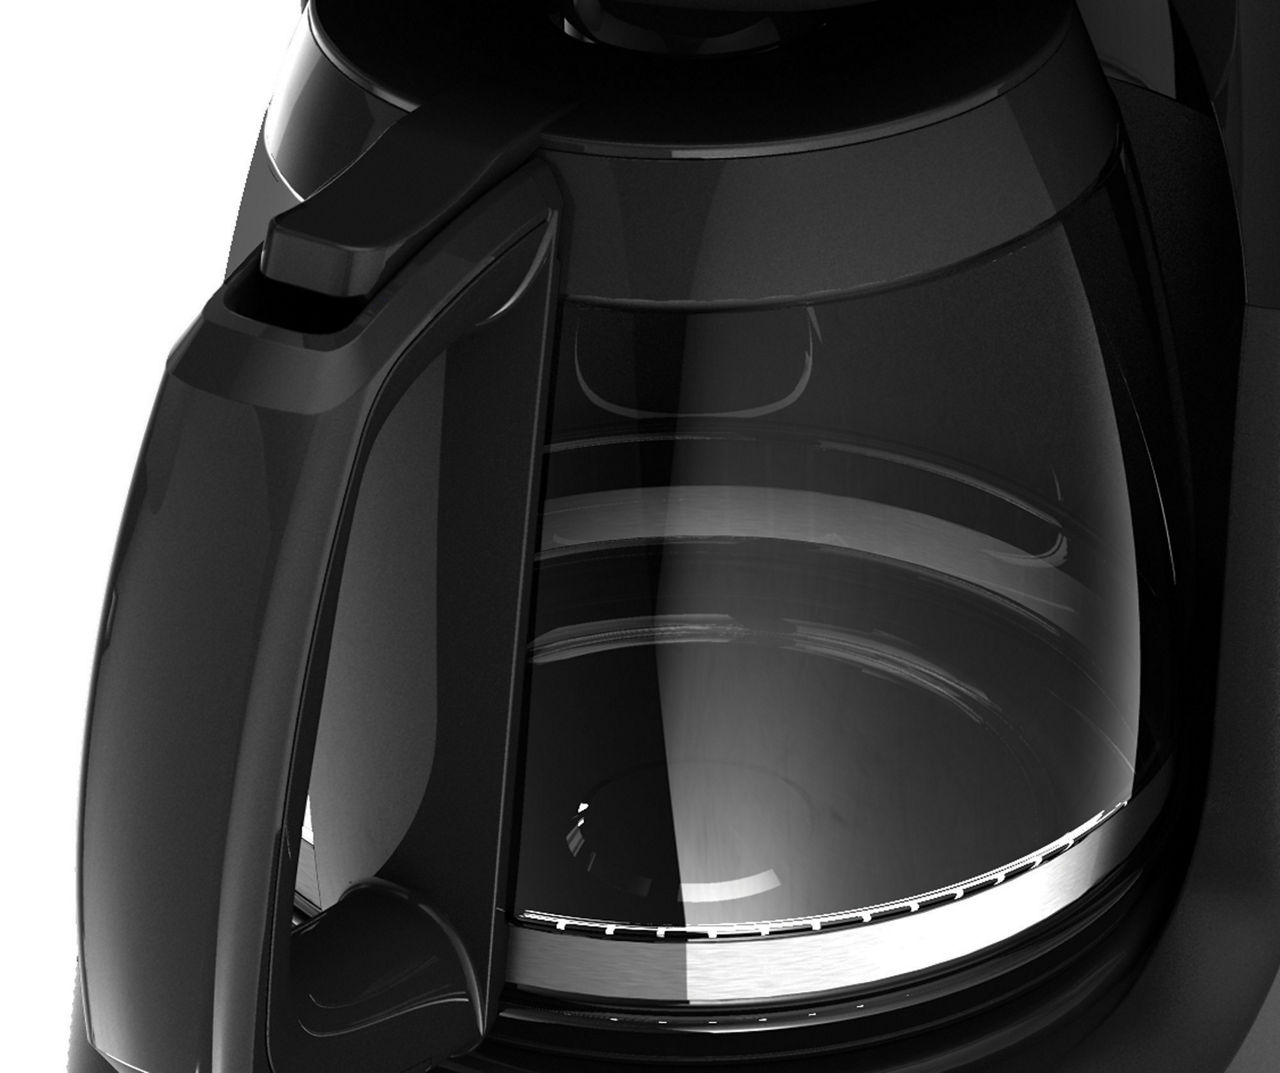 Black+decker 12 Cup Switch Coffee Maker | Big Lots